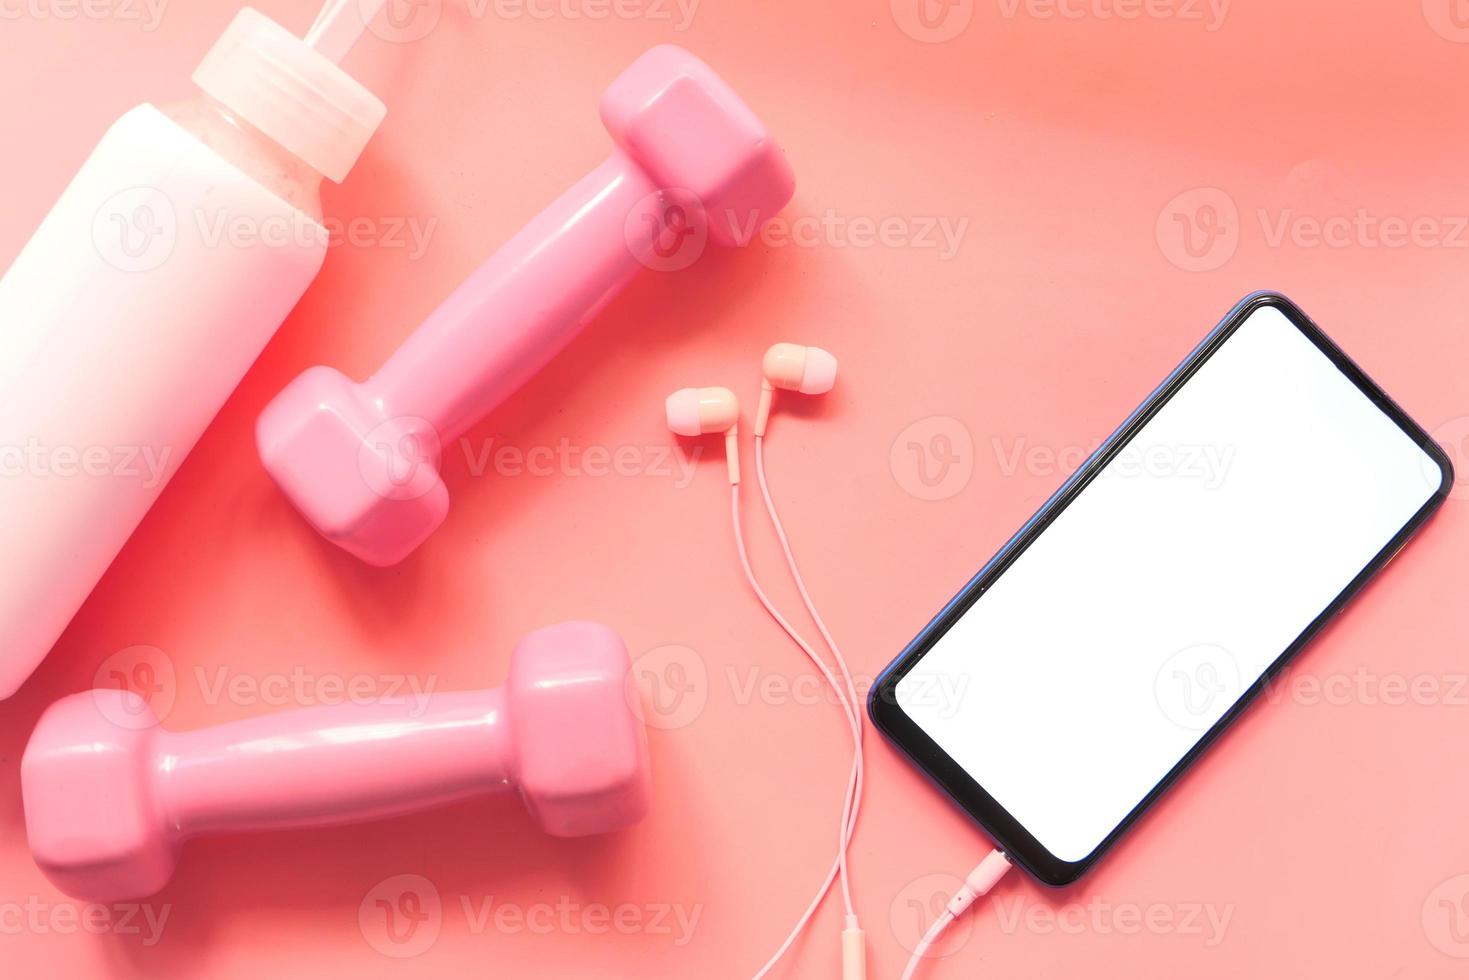 slimme telefoon met roze sportartikelen op houten vloer foto